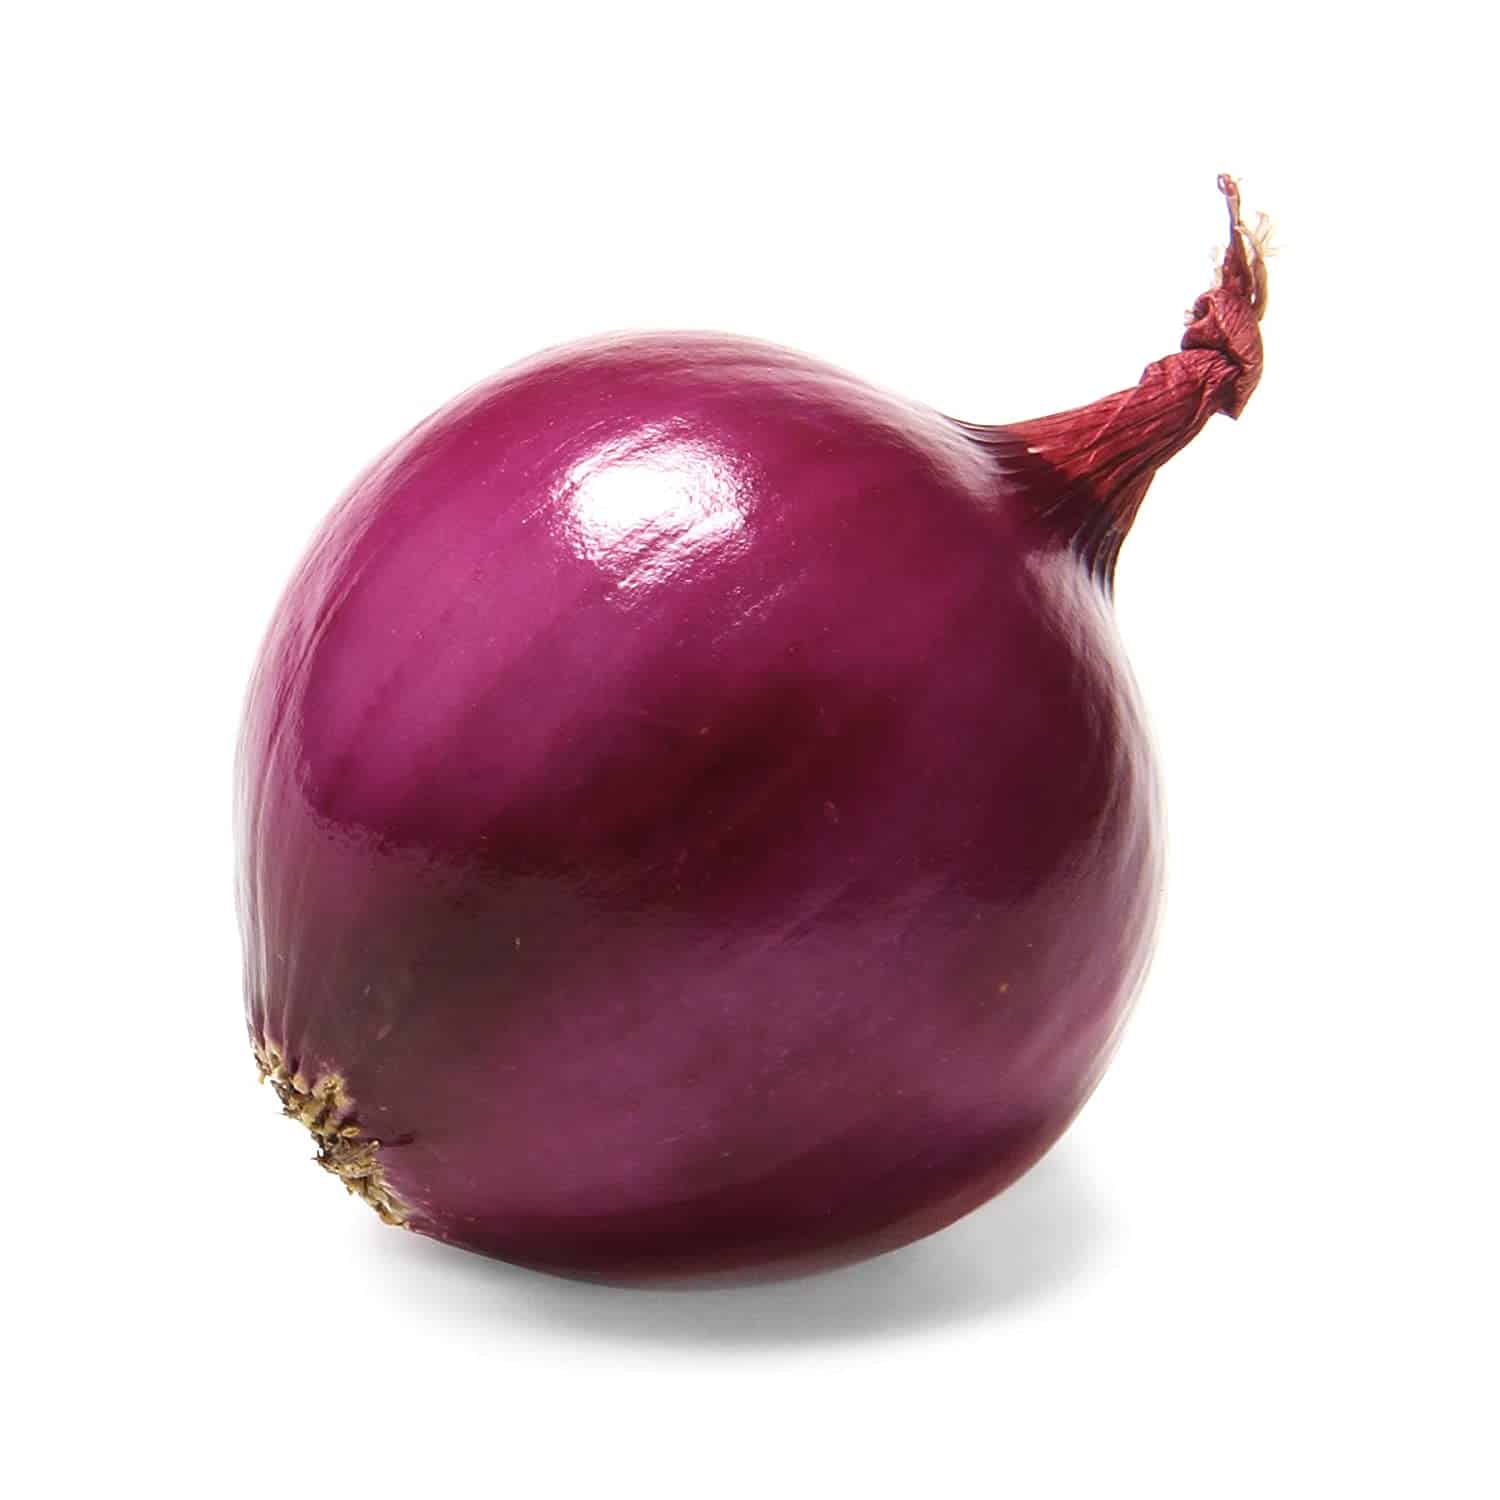 Organic Red Onion Per Each